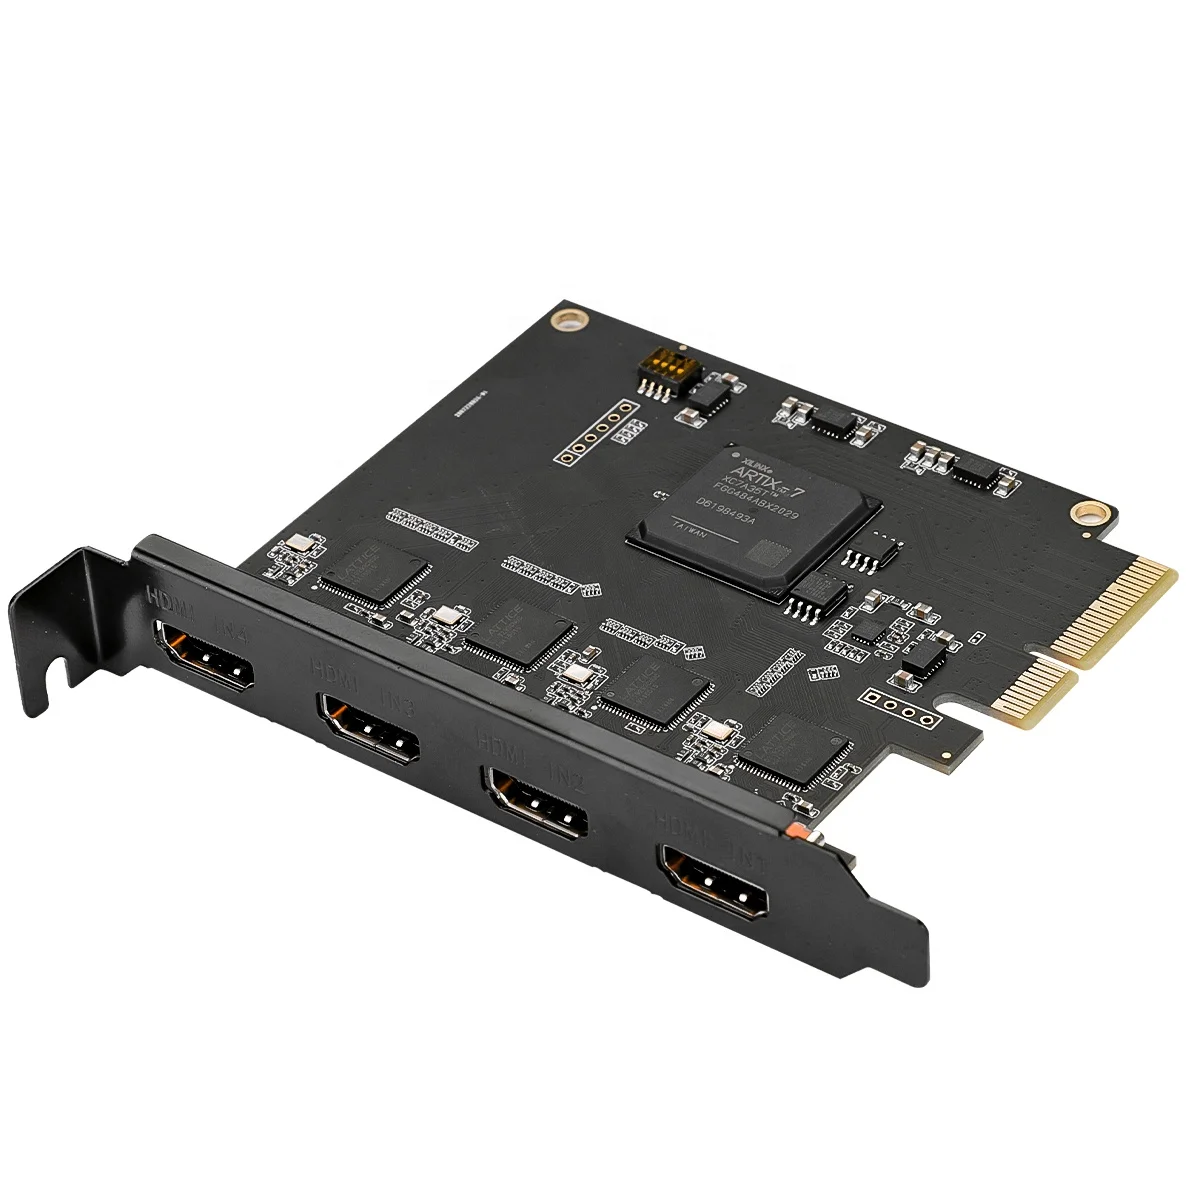 

IOCREST Quad HD MI Video Capture Card PCI-e x4 Interface Multi-Channel Live Streaming